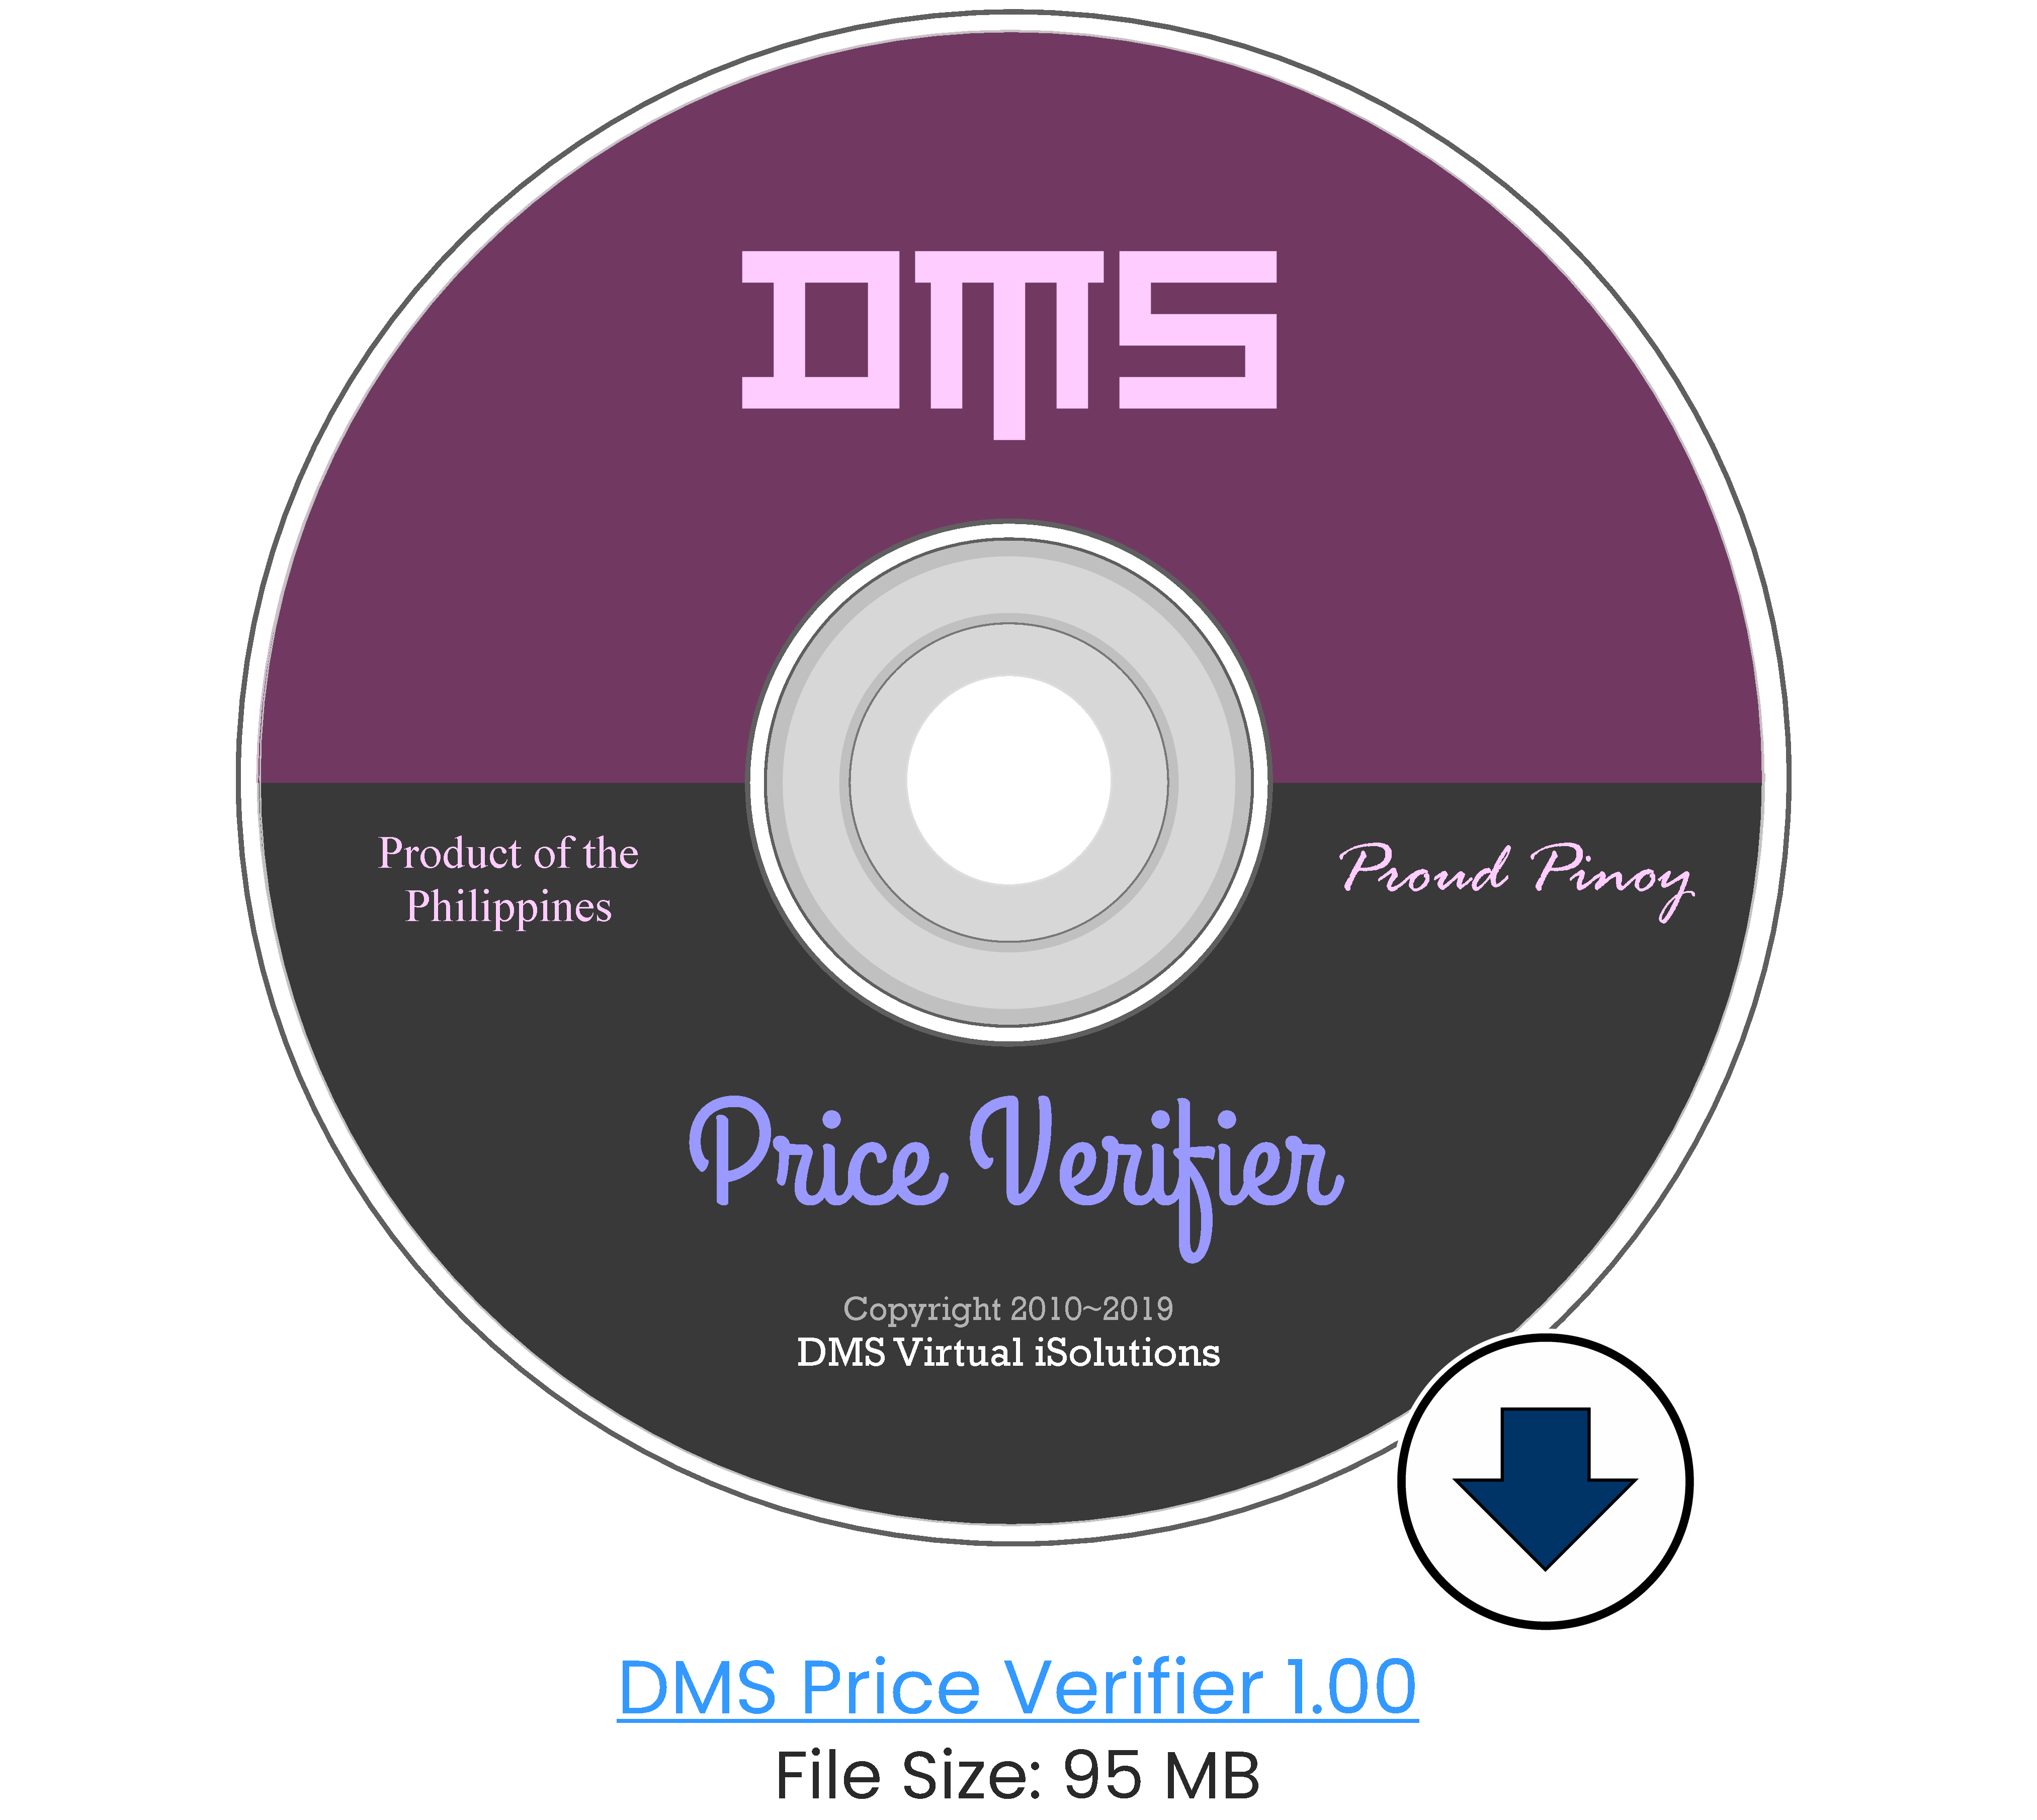 DMS Price Verifier 1.00 Download